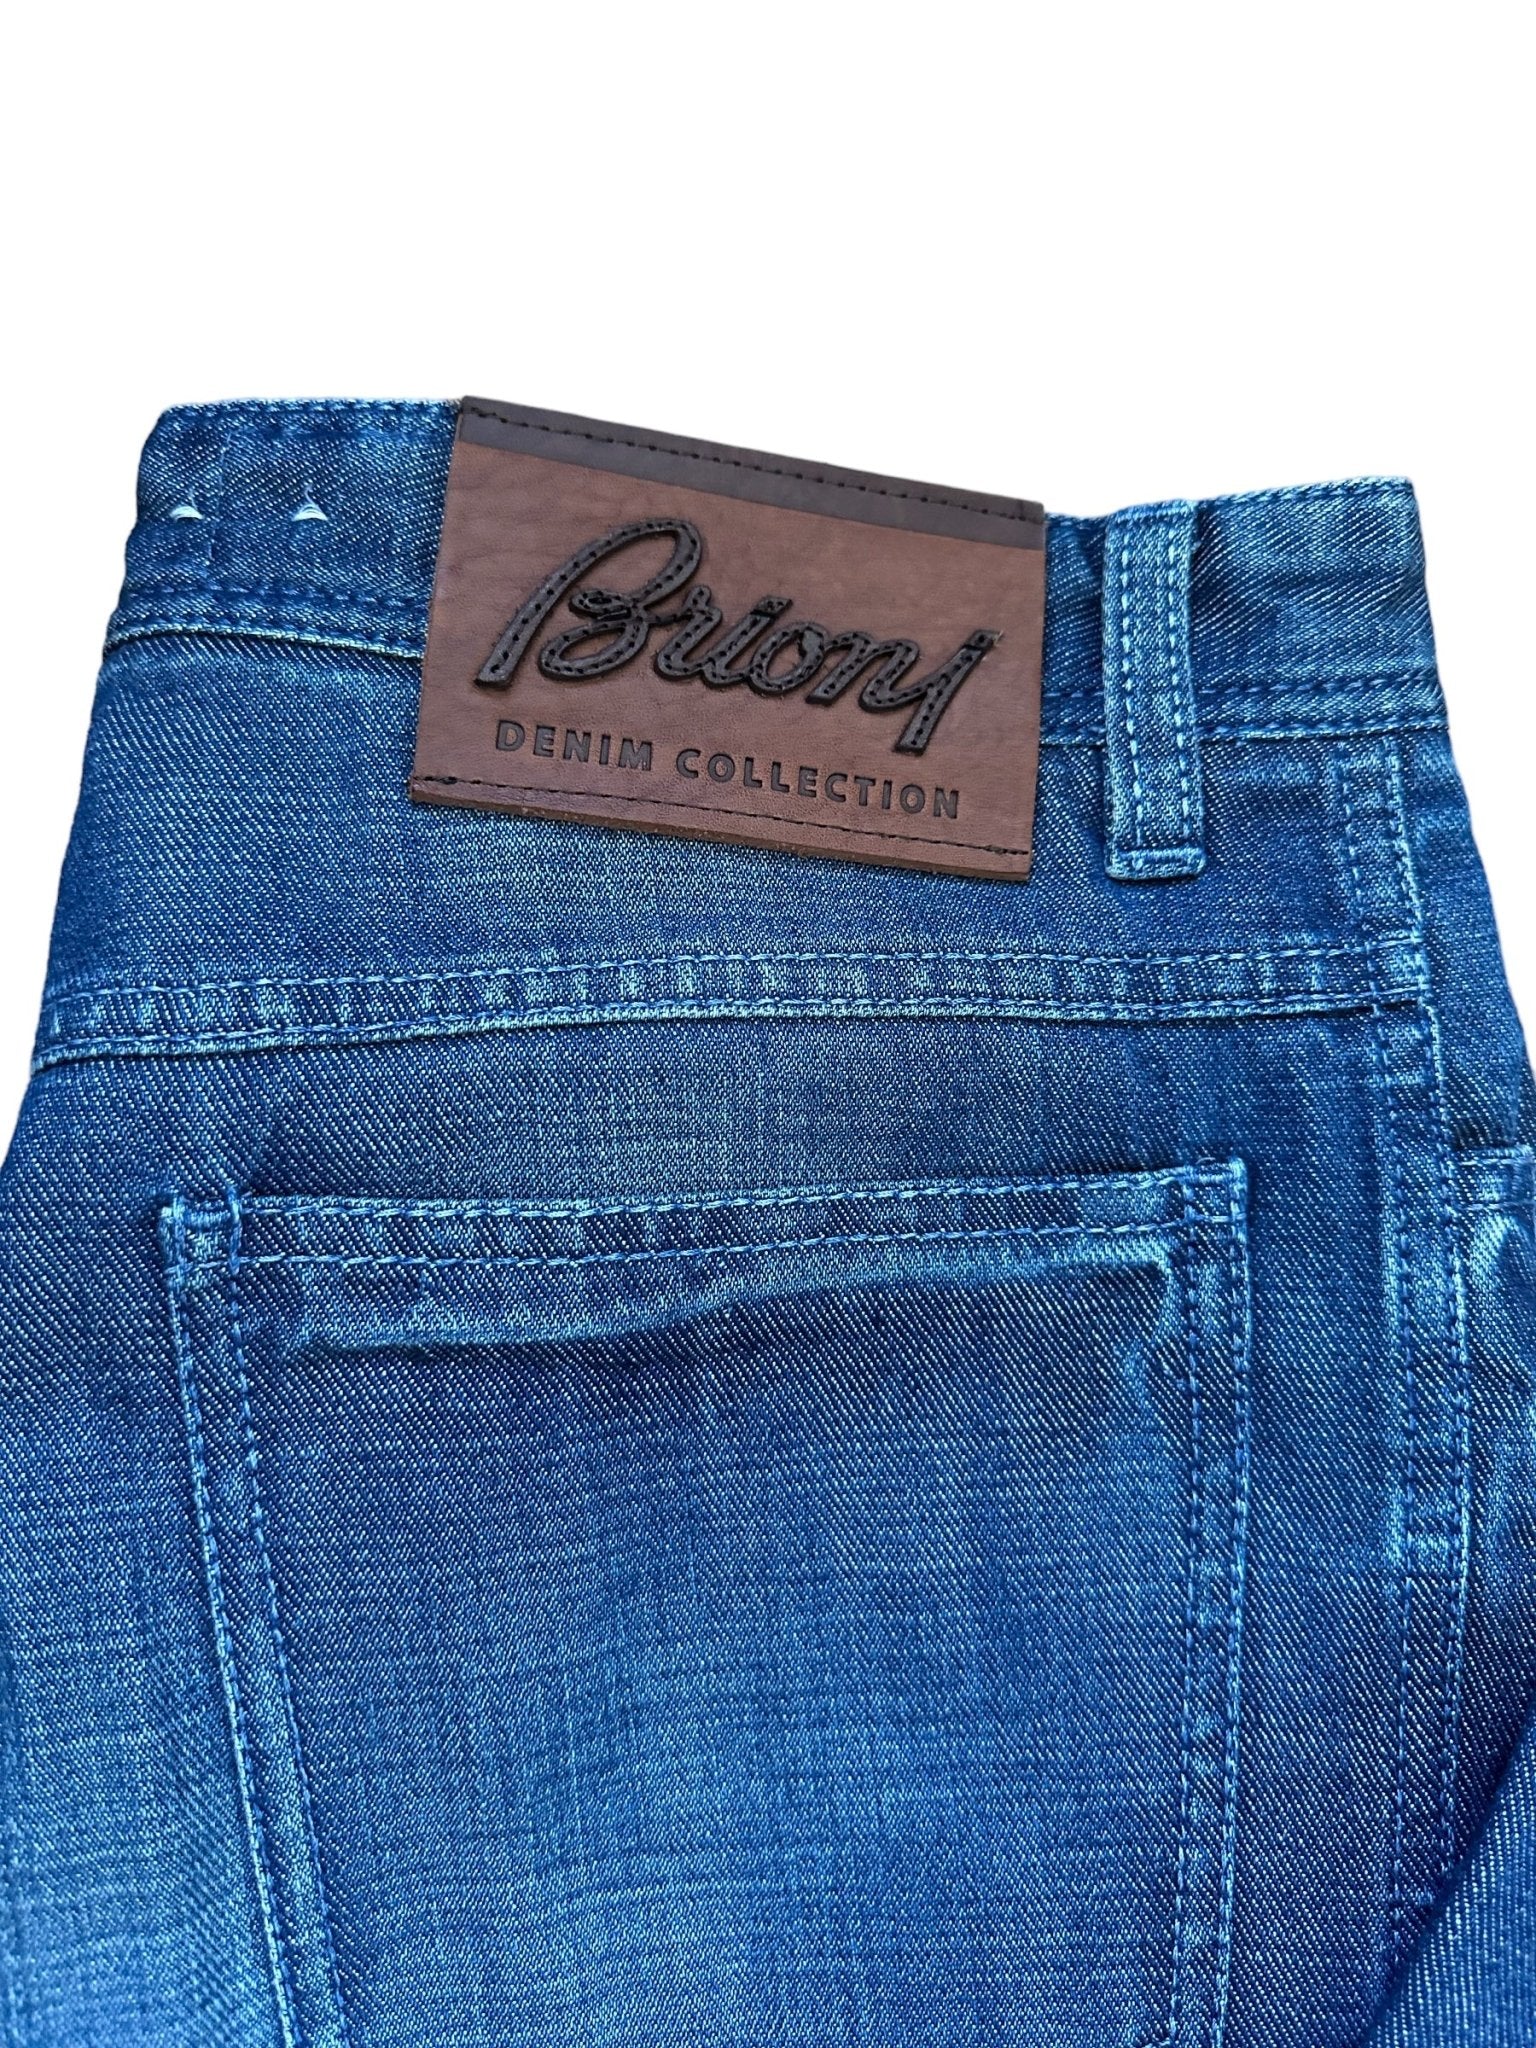 Brioni Jeans Stelvio - 24/7 Clothing